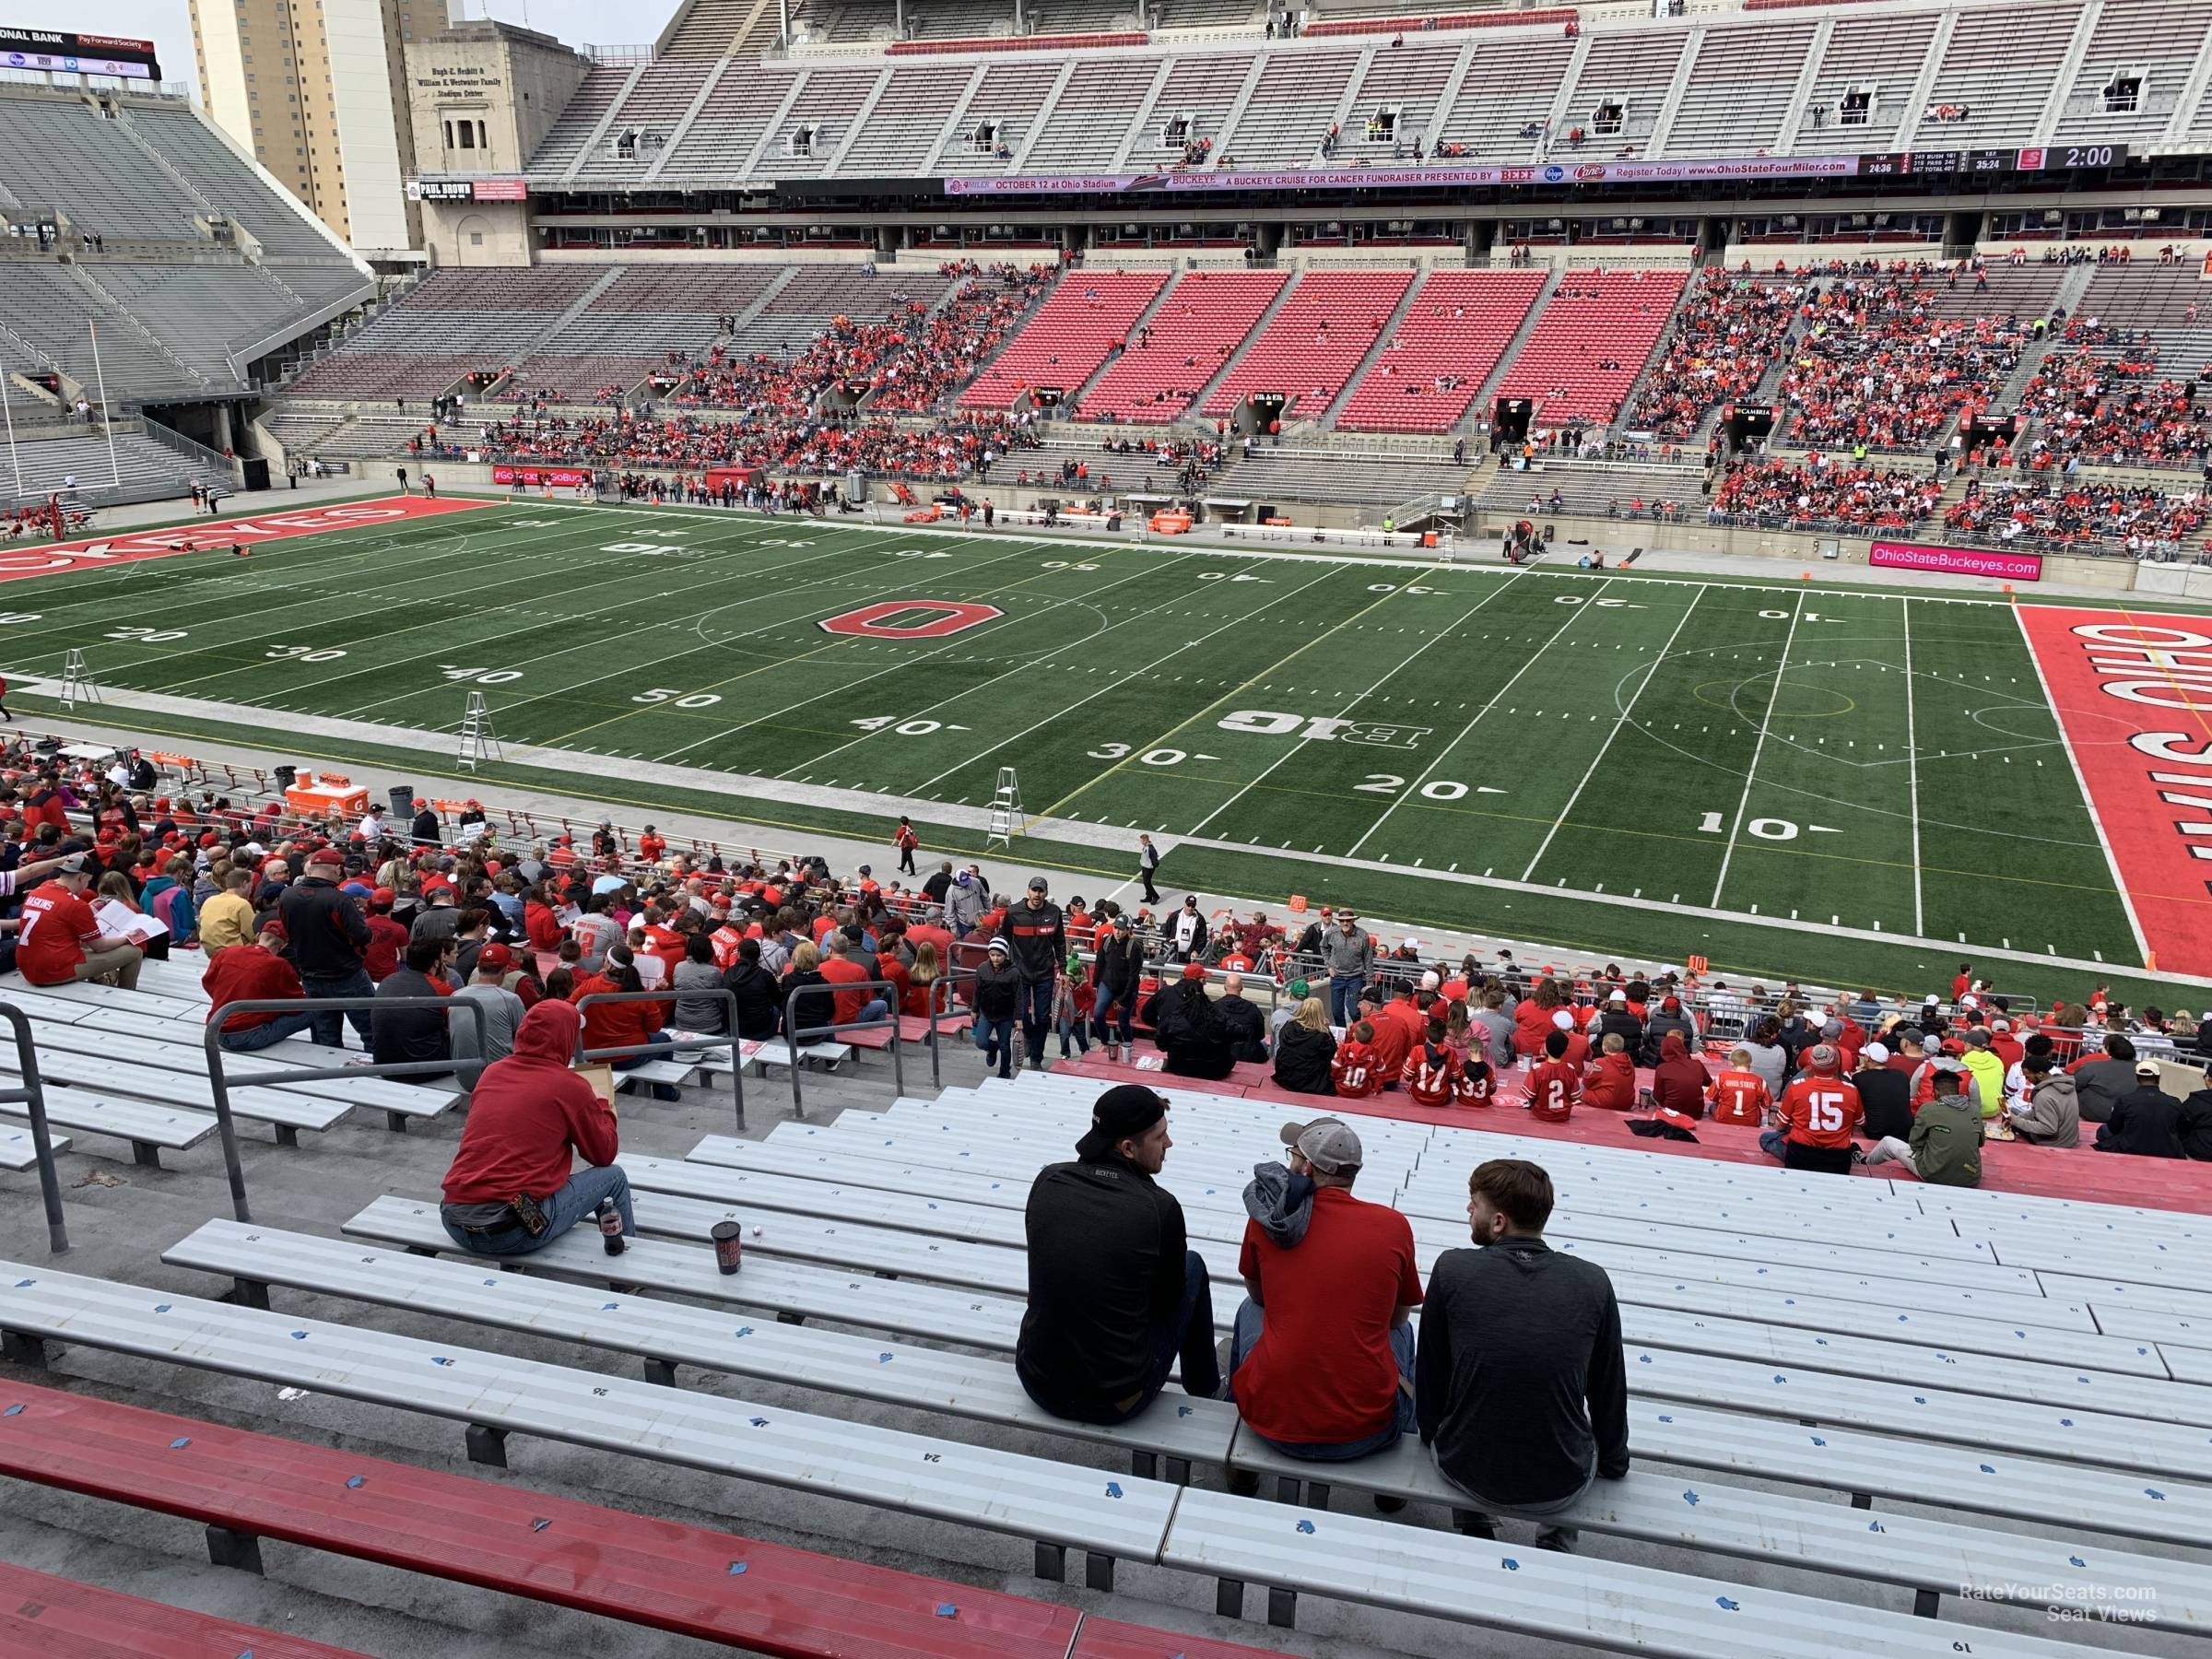 section 18a, row 25 seat view  - ohio stadium